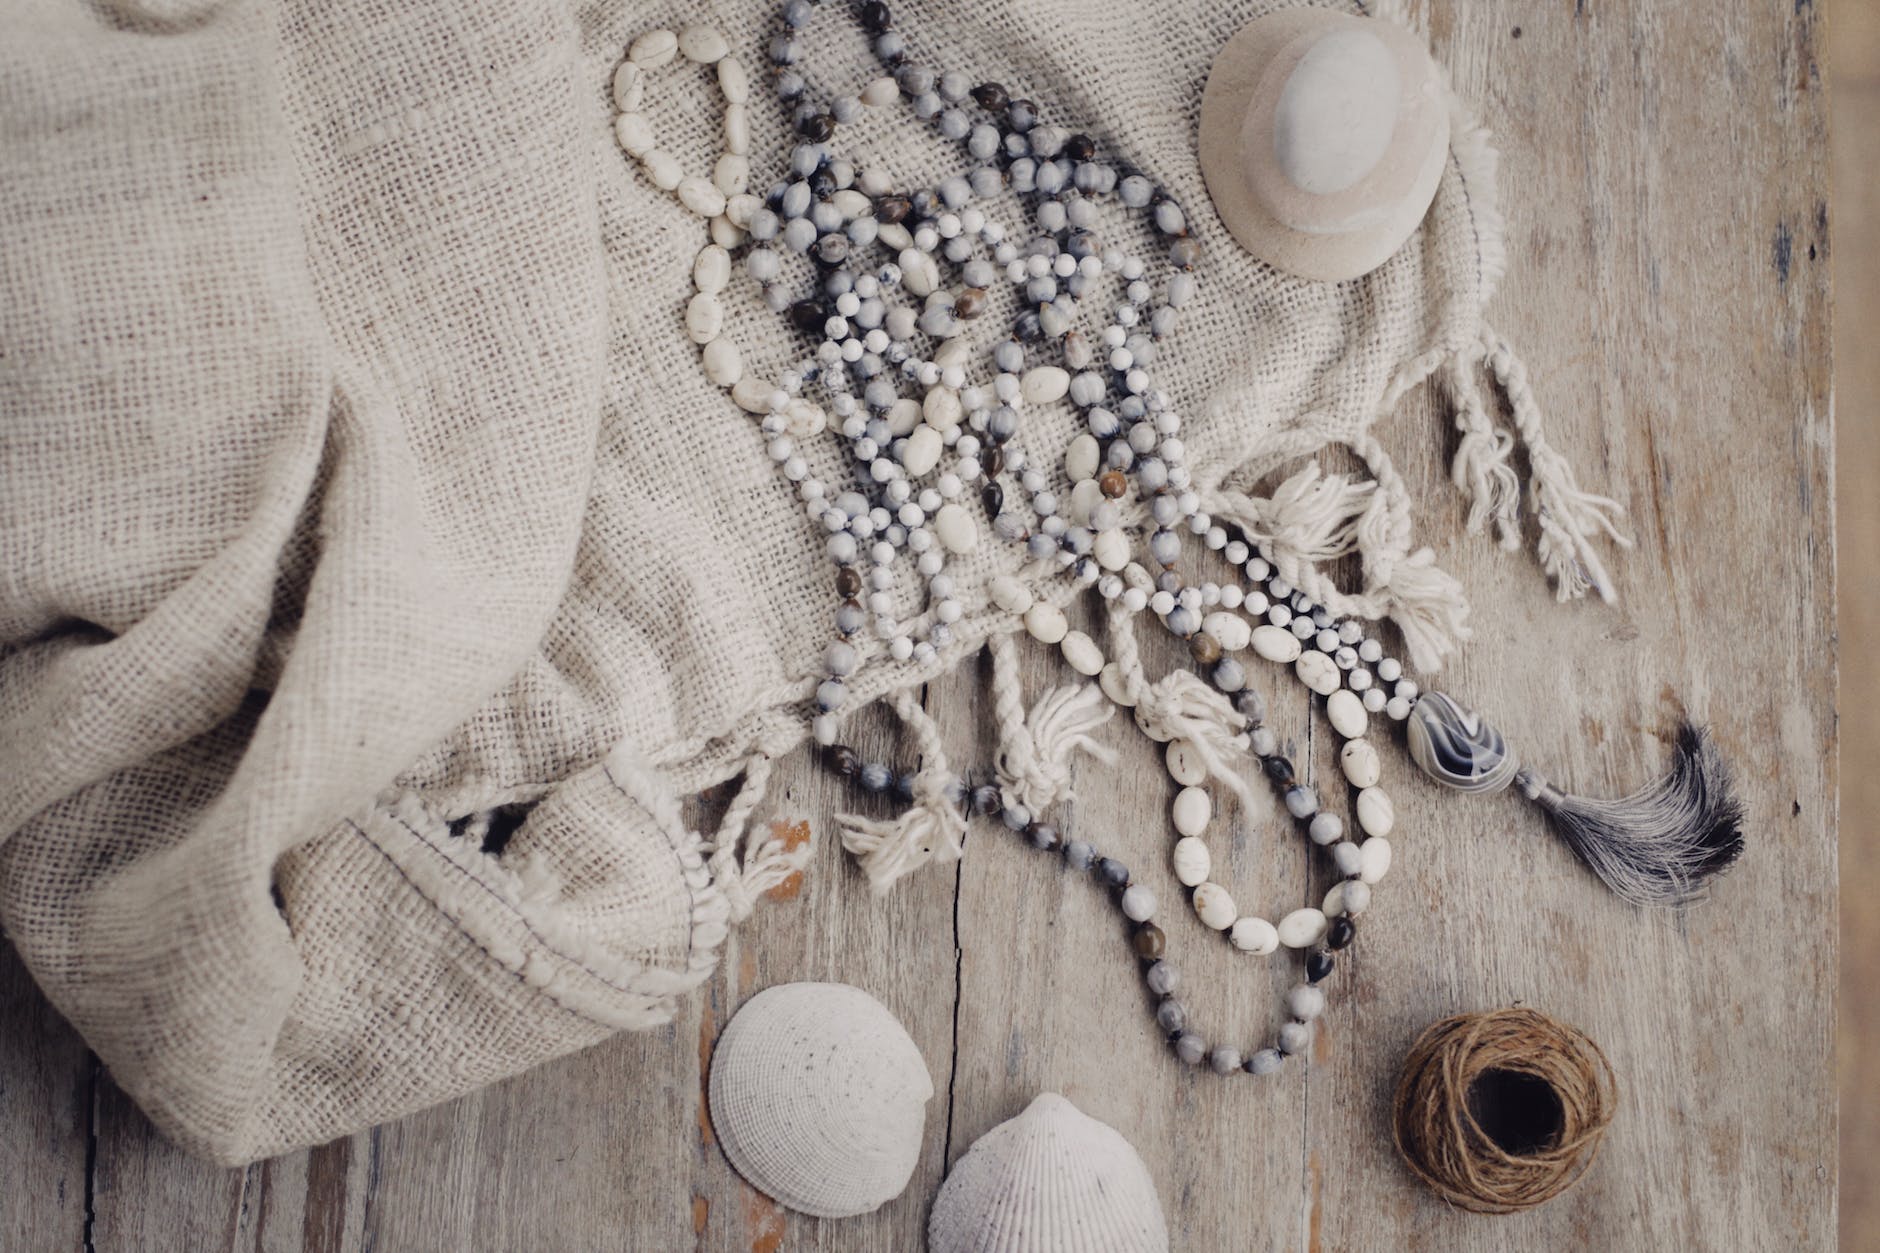 Handmade Jewelry Using seashells: Turn Beach Memories into Wearable Souvenirs